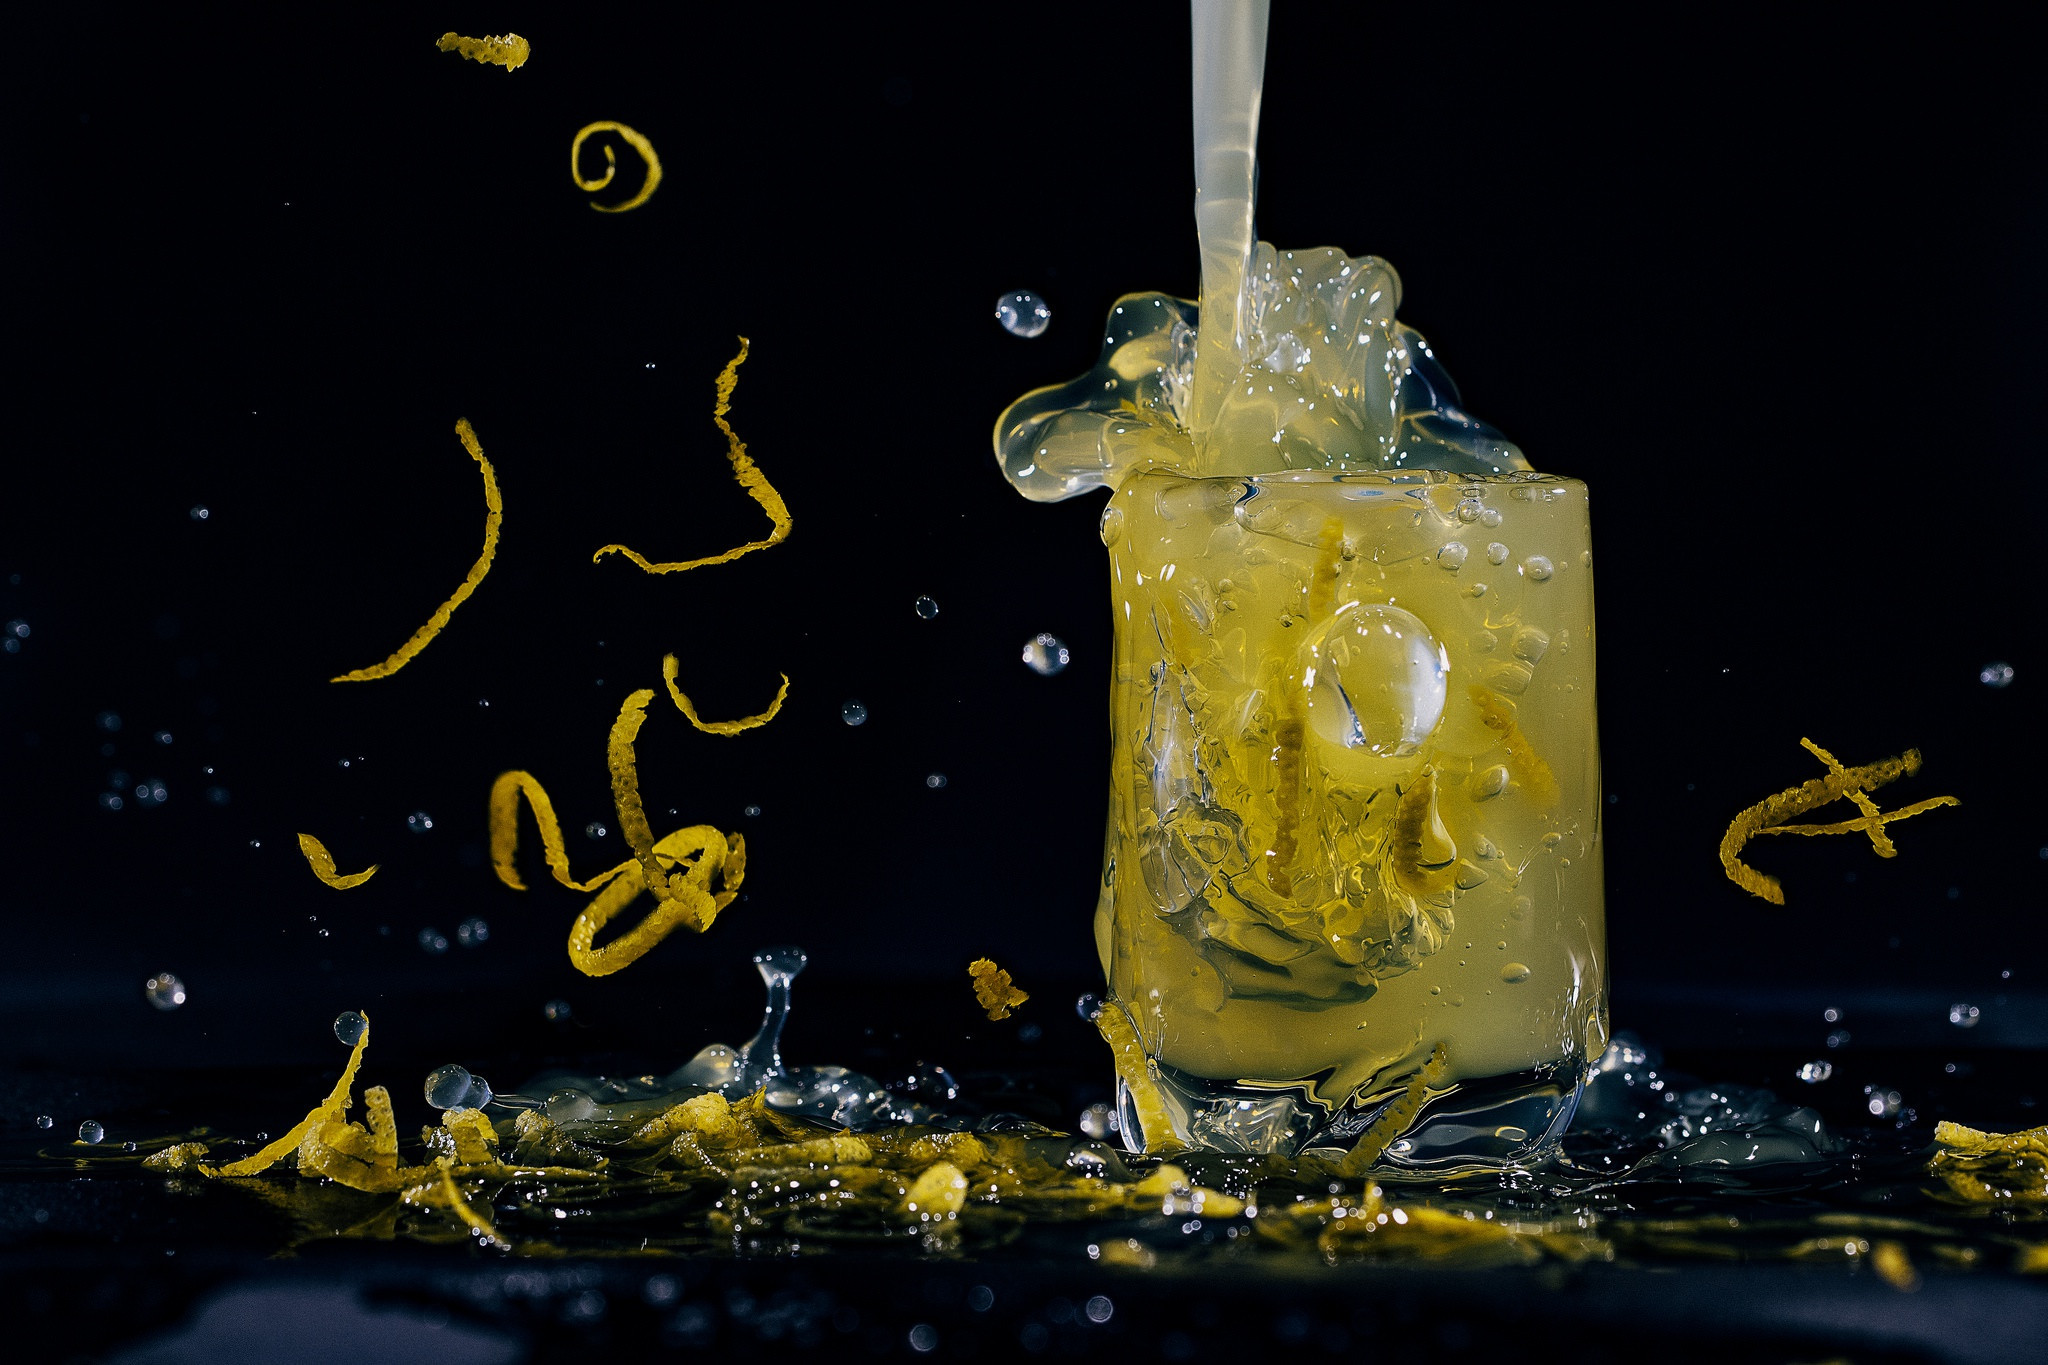 Delicious lemonade in a glass